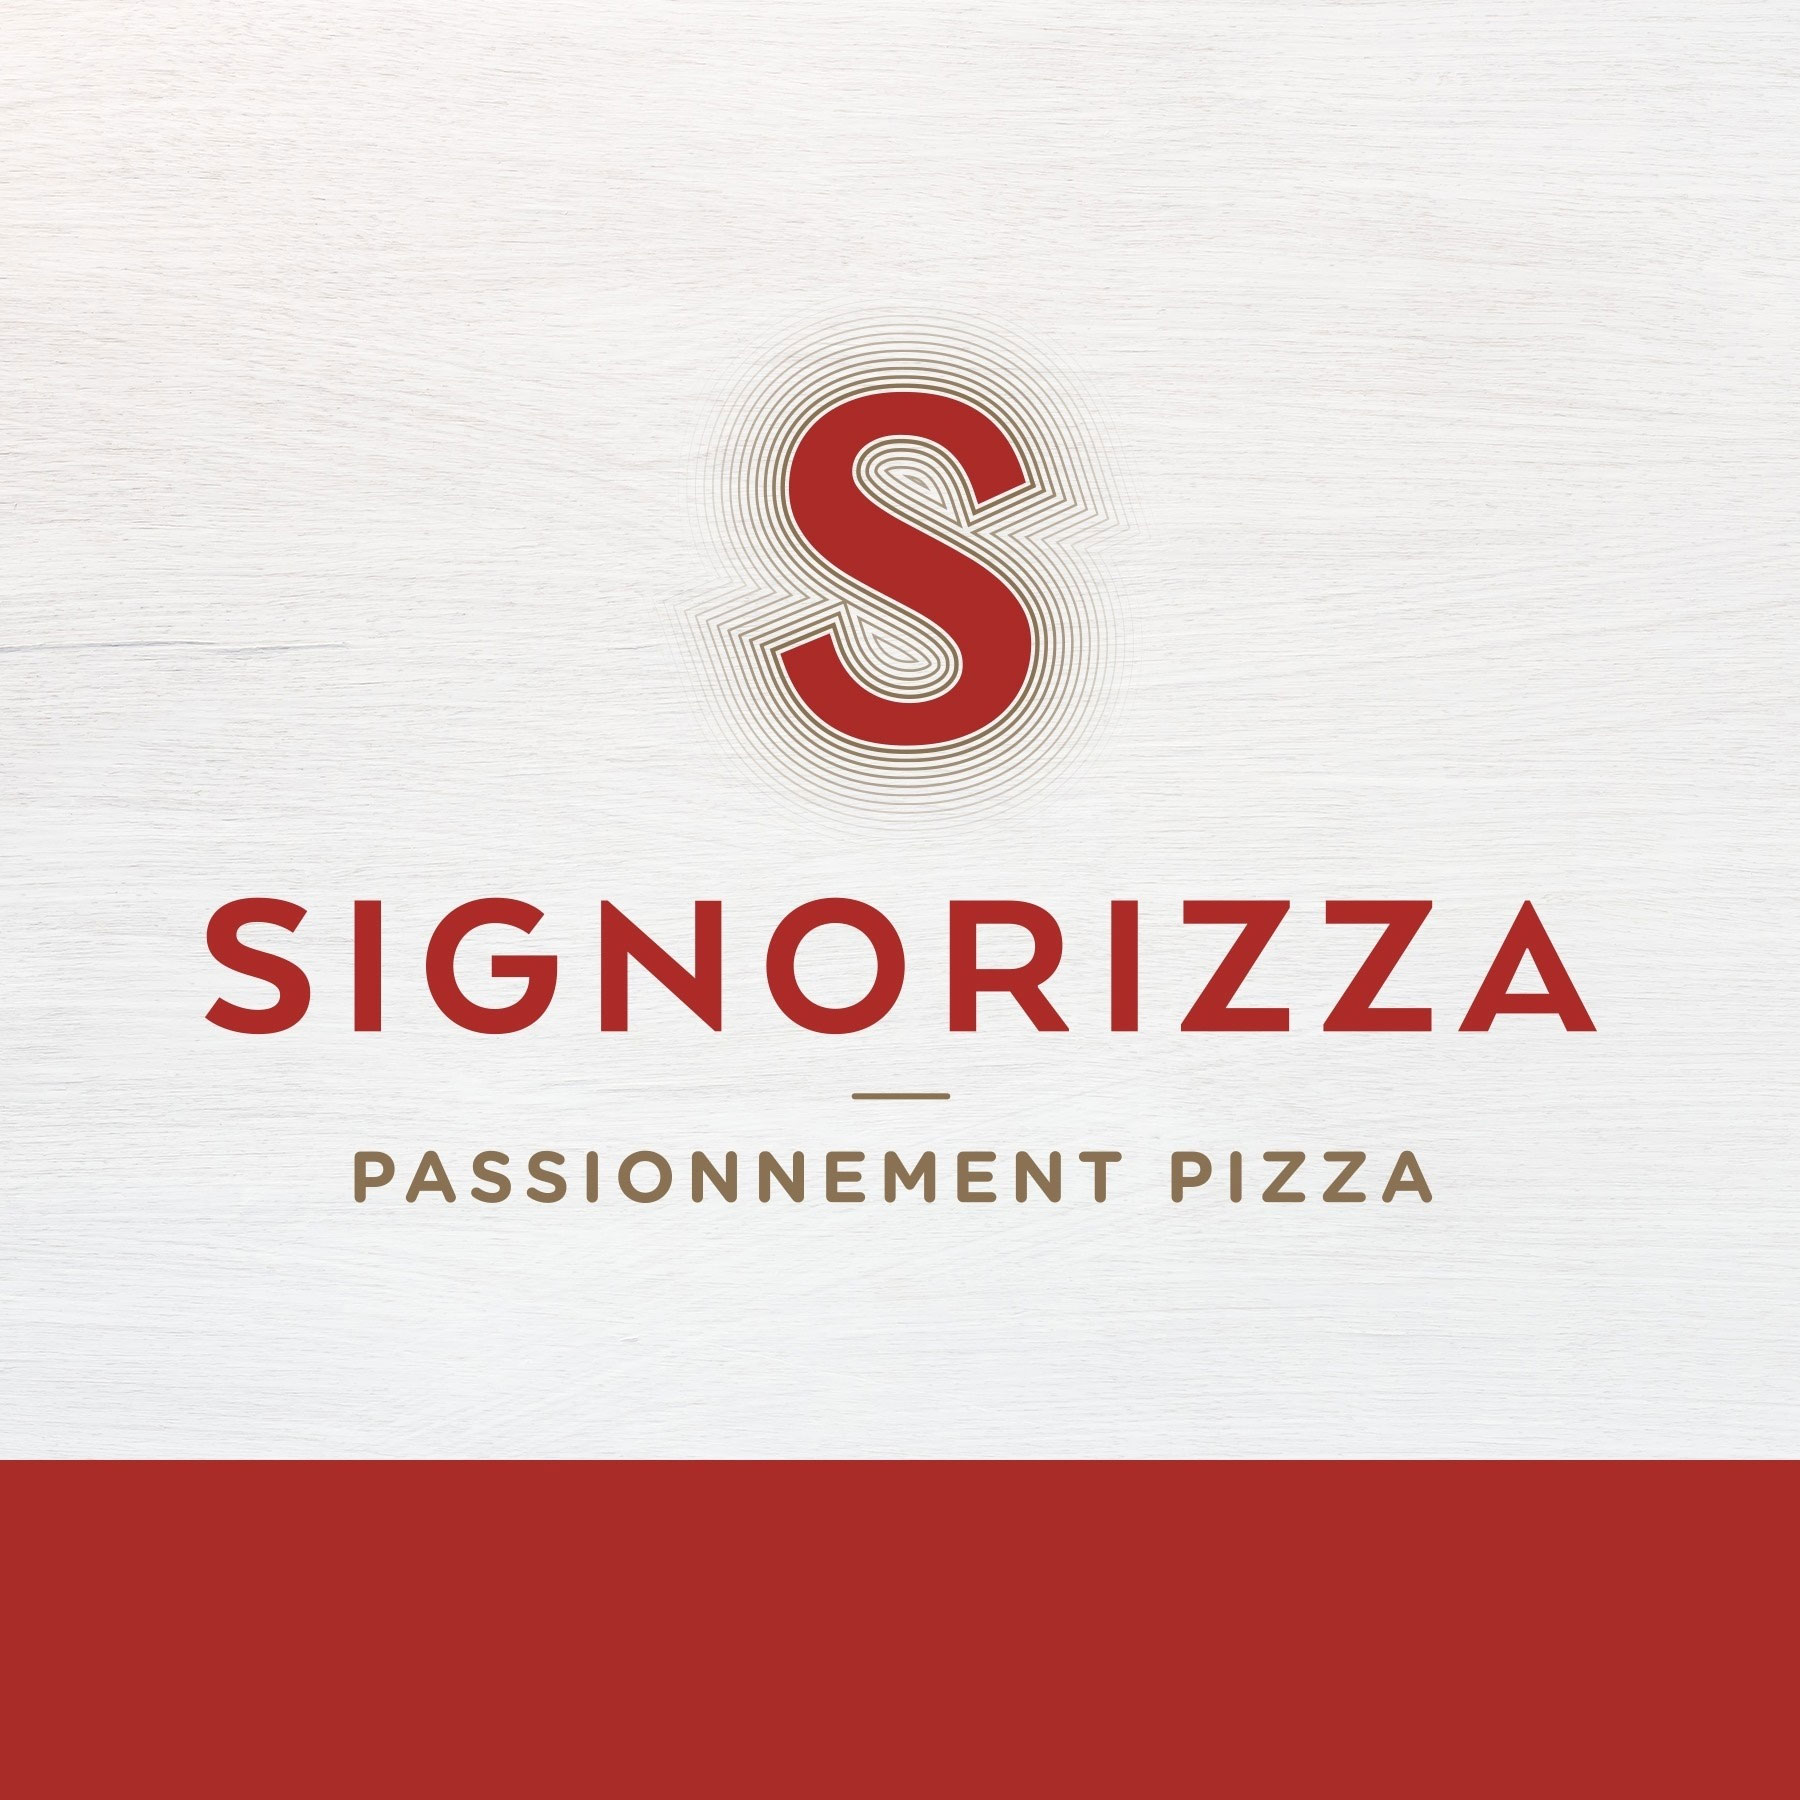 Signorizza Pizzeria Restaurant Angers